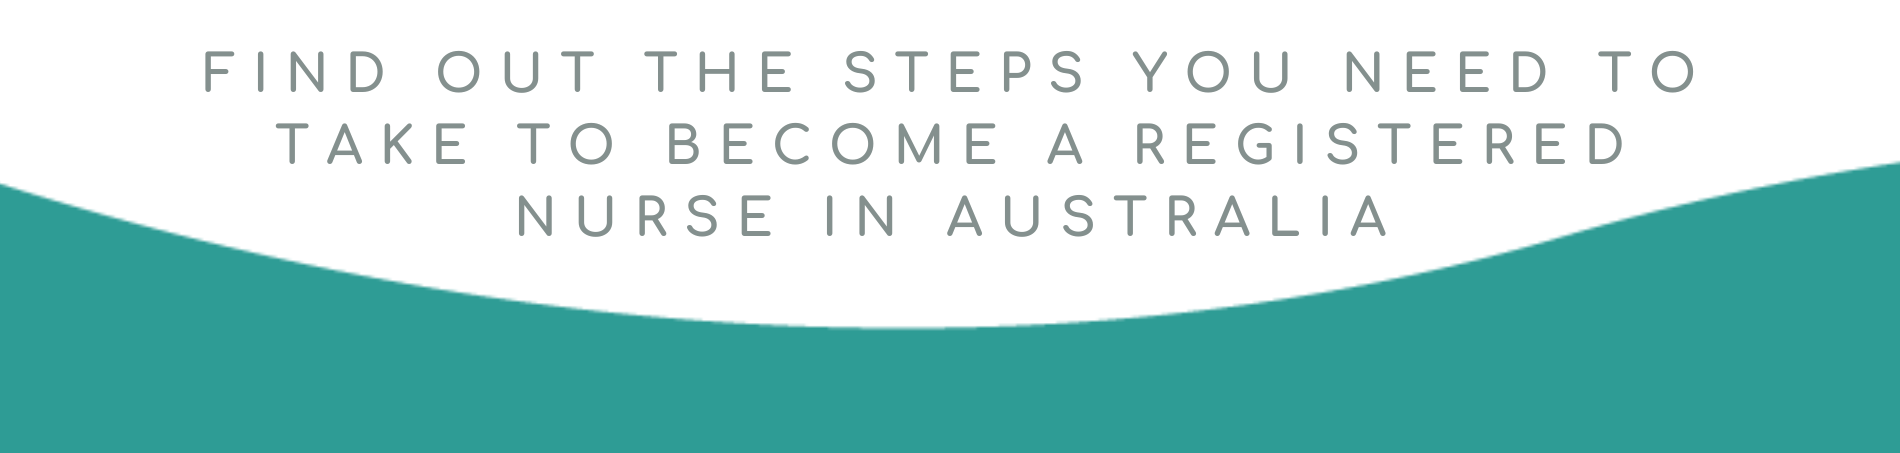 become a registered nurse in australia